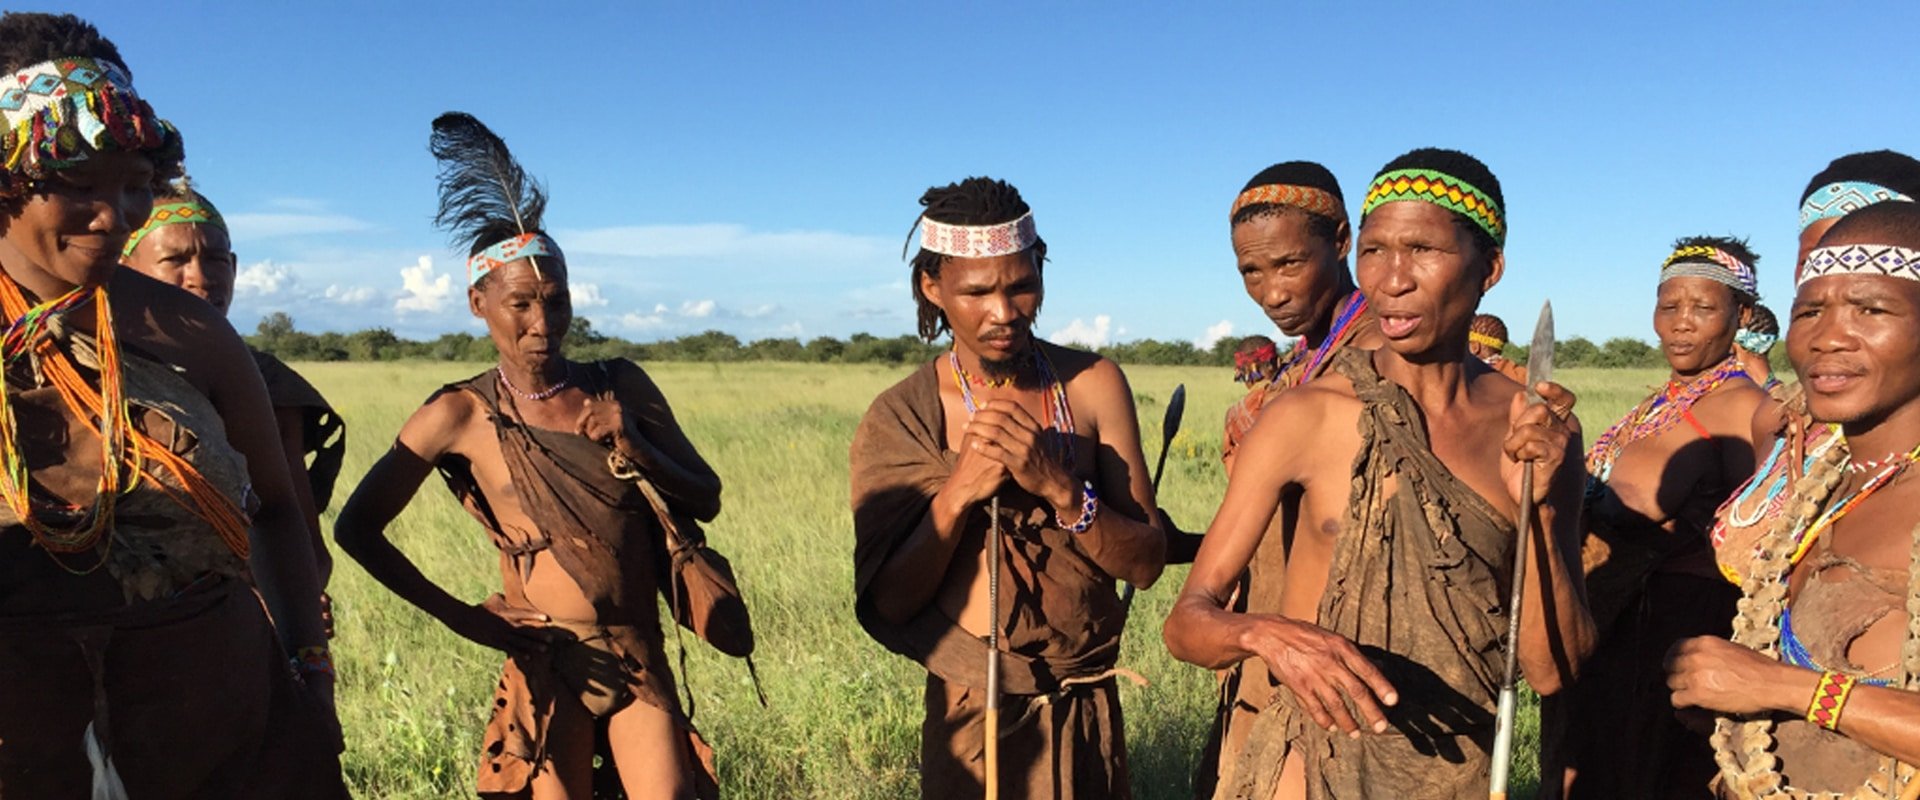 Interact with the Zu/’hoasi Bushmen